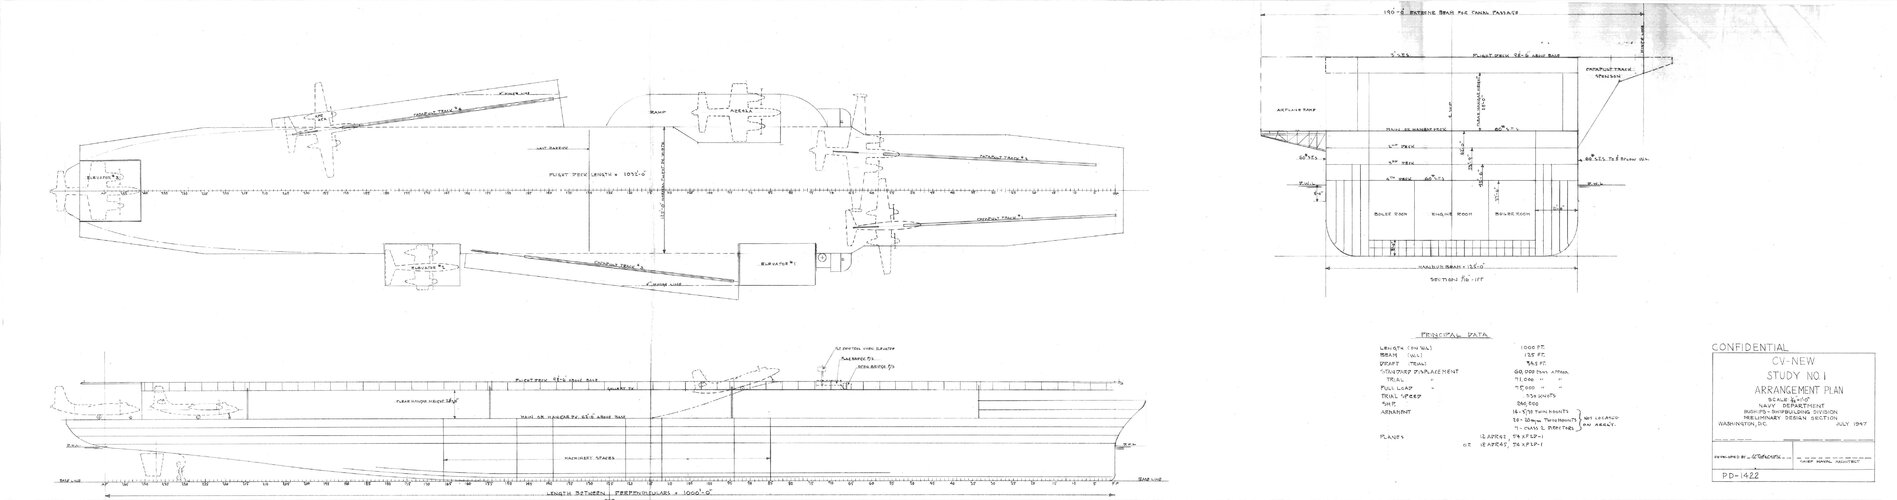 USS_United_States_(CVA-58)_preliminary_design_drawing,_July_1947.jpg